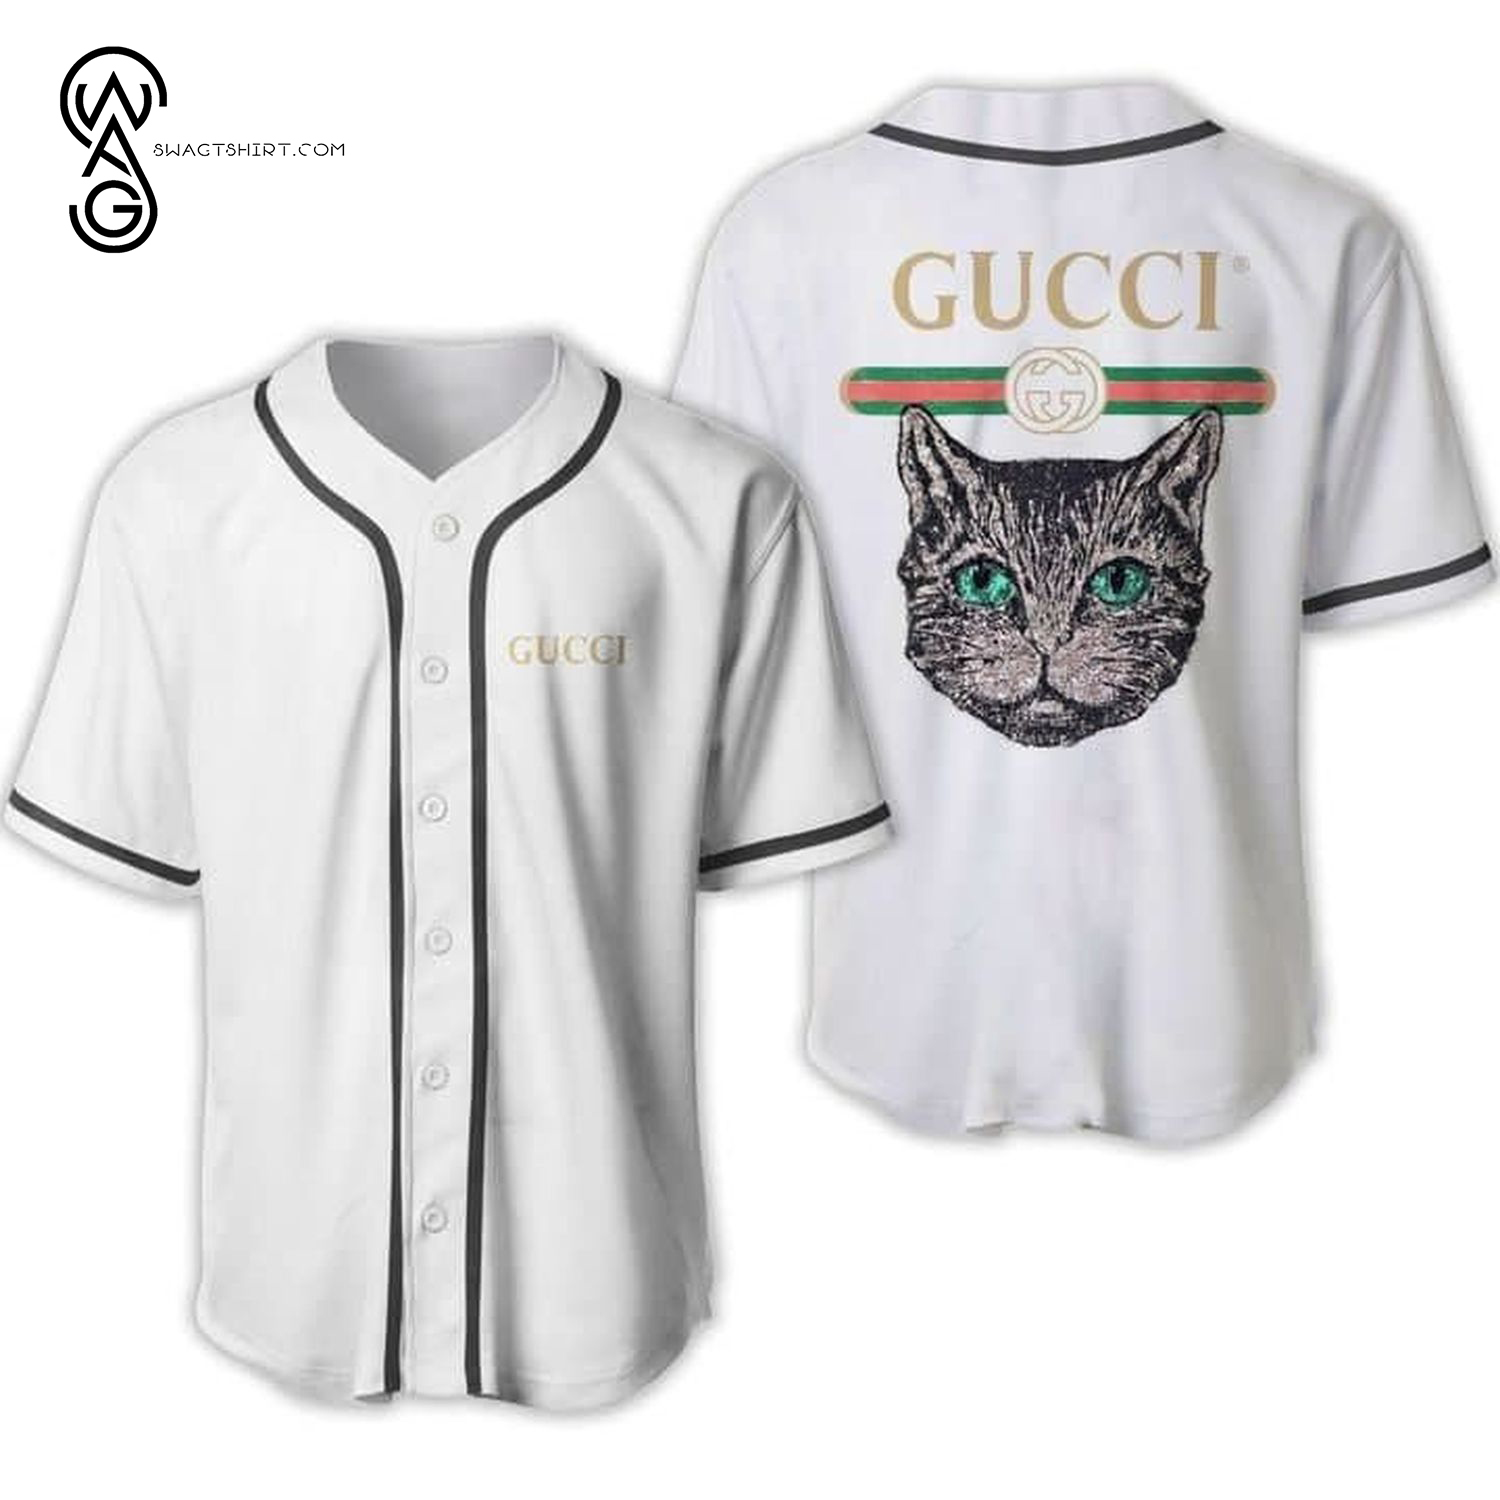 Gucci And Cat Full Printed Baseball Jersey